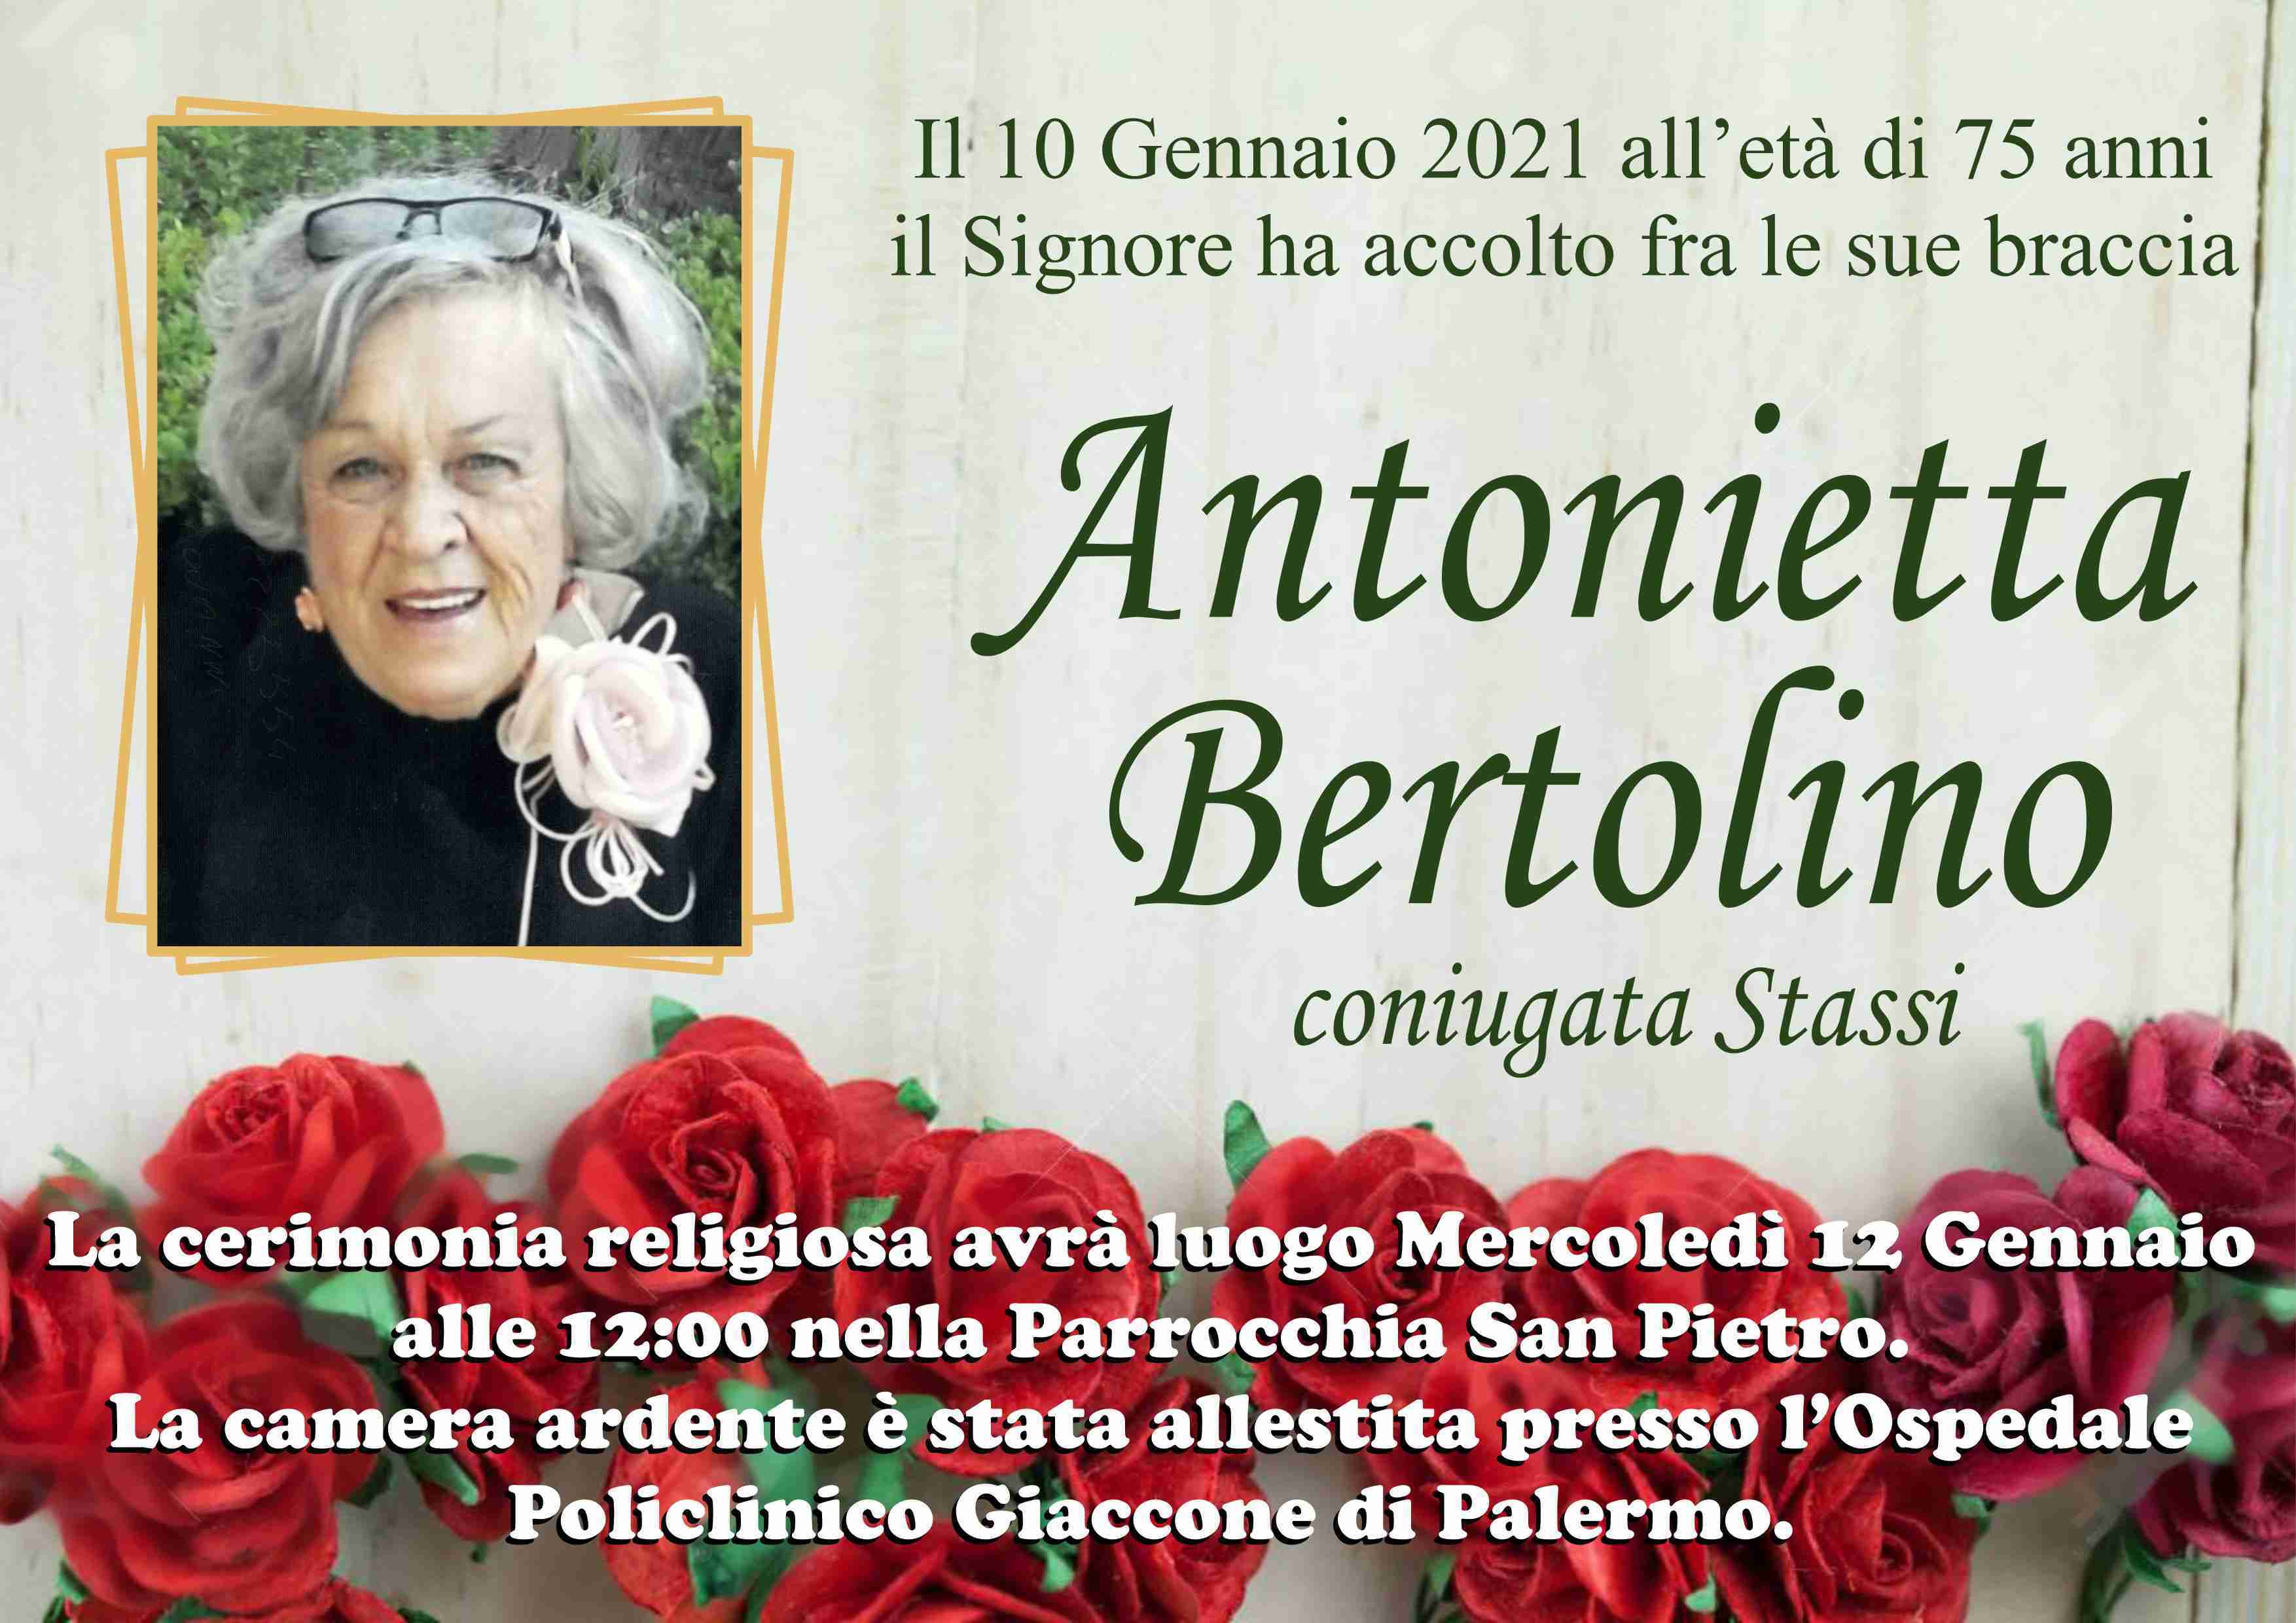 Antonietta Bertolino